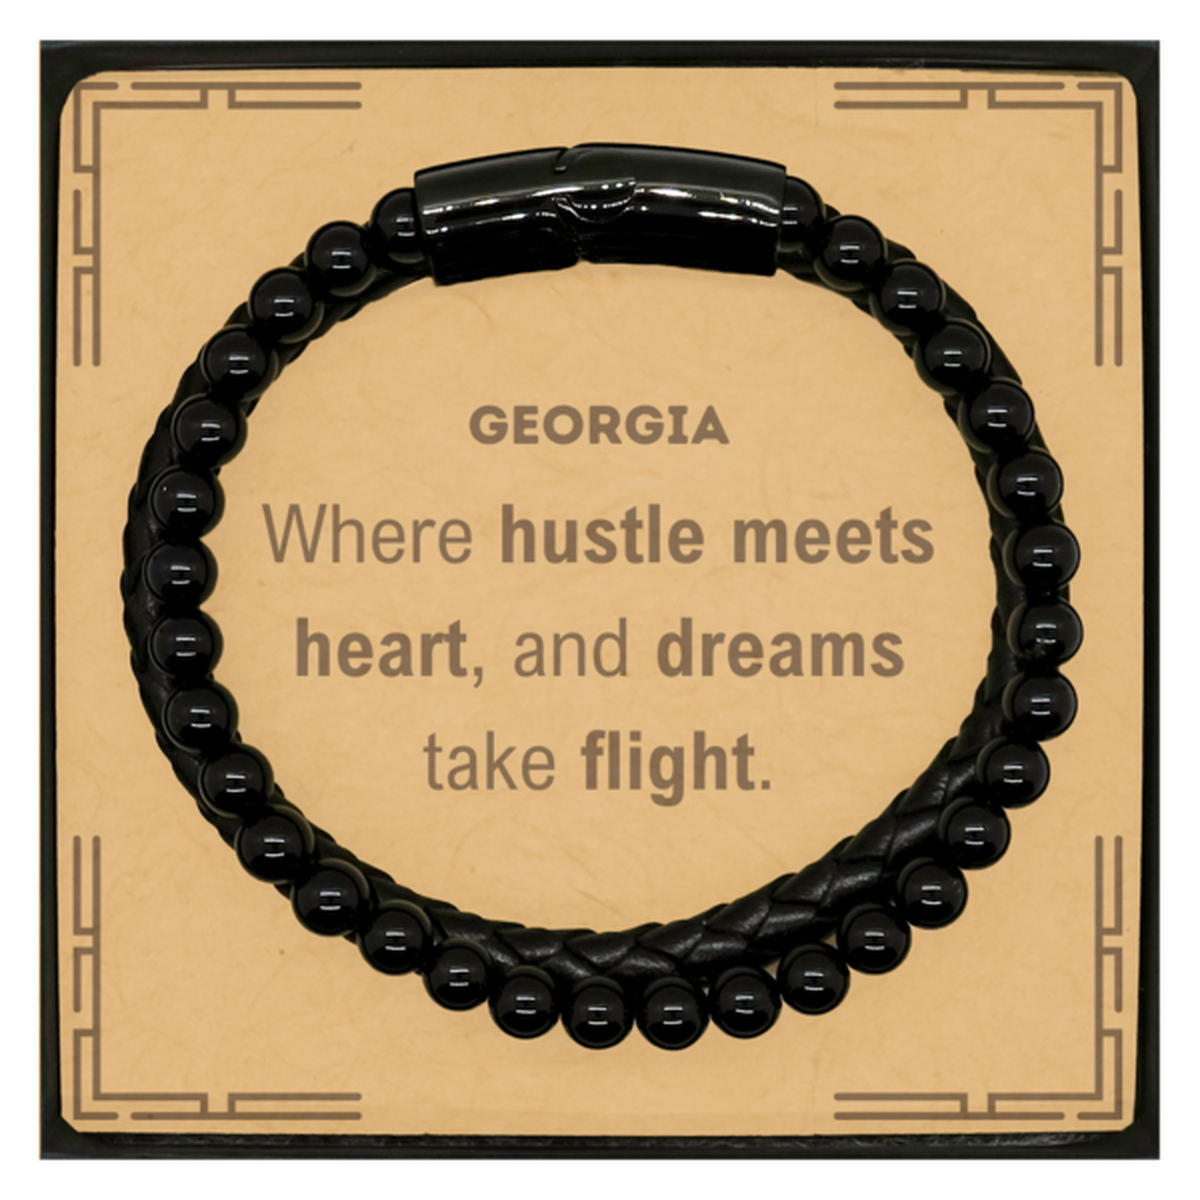 Georgia: Where hustle meets heart, and dreams take flight, Georgia Card Gifts, Proud Georgia Christmas Birthday Georgia Stone Leather Bracelets, Georgia State People, Men, Women, Friends